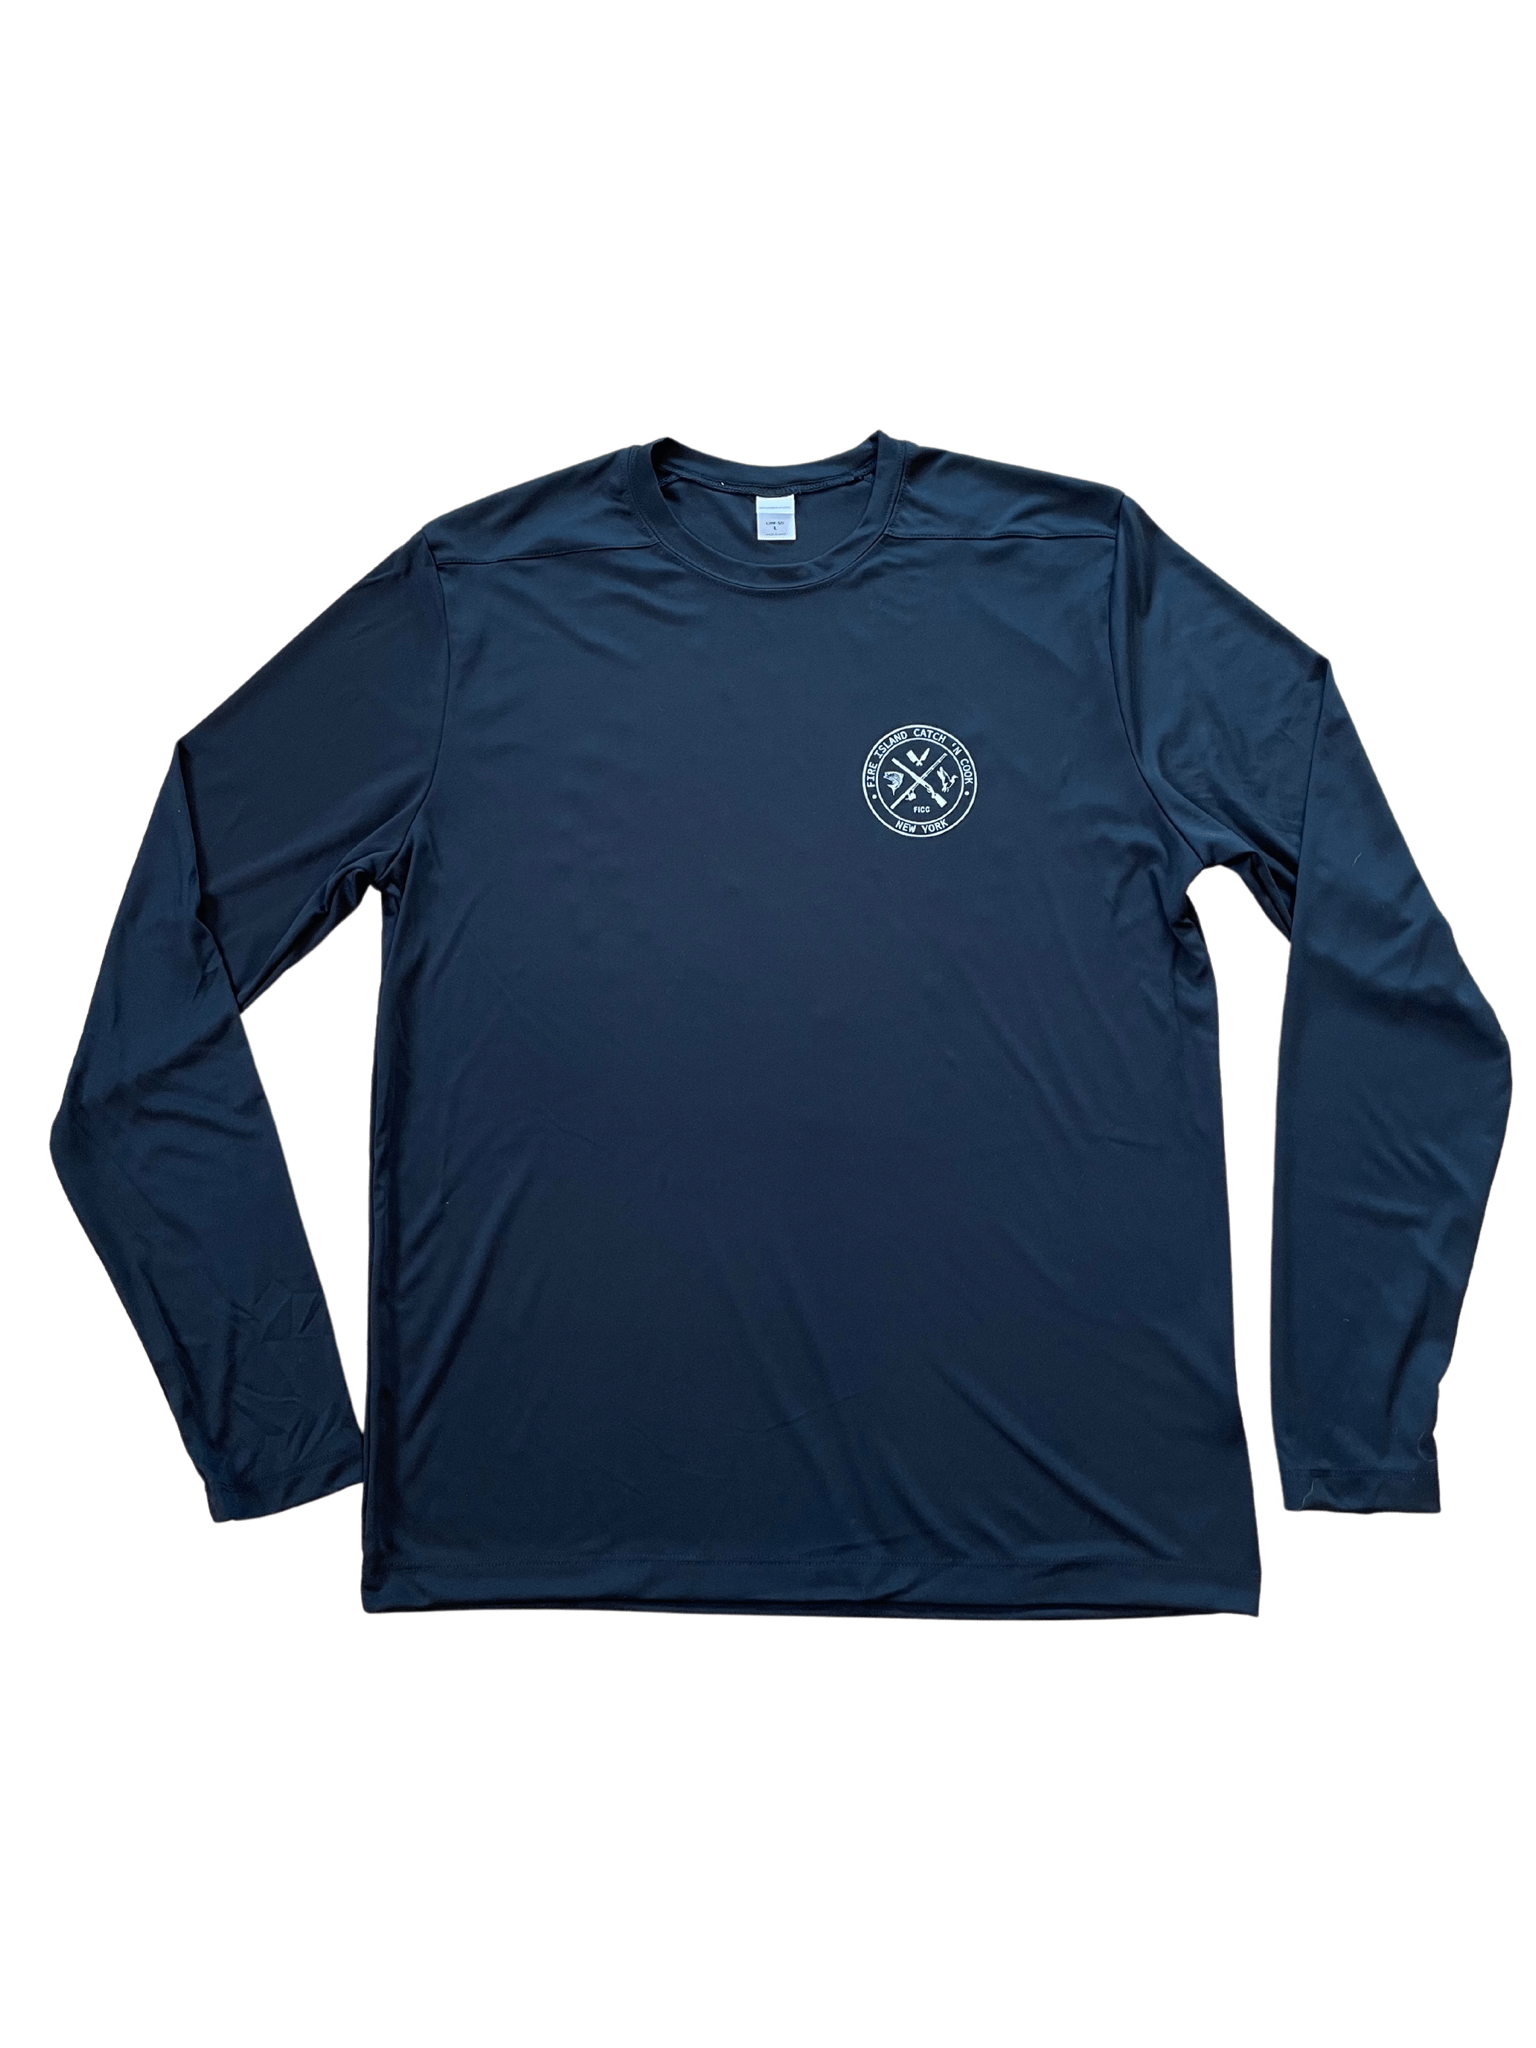 Navy Blue Fishing Shirt - FYNX